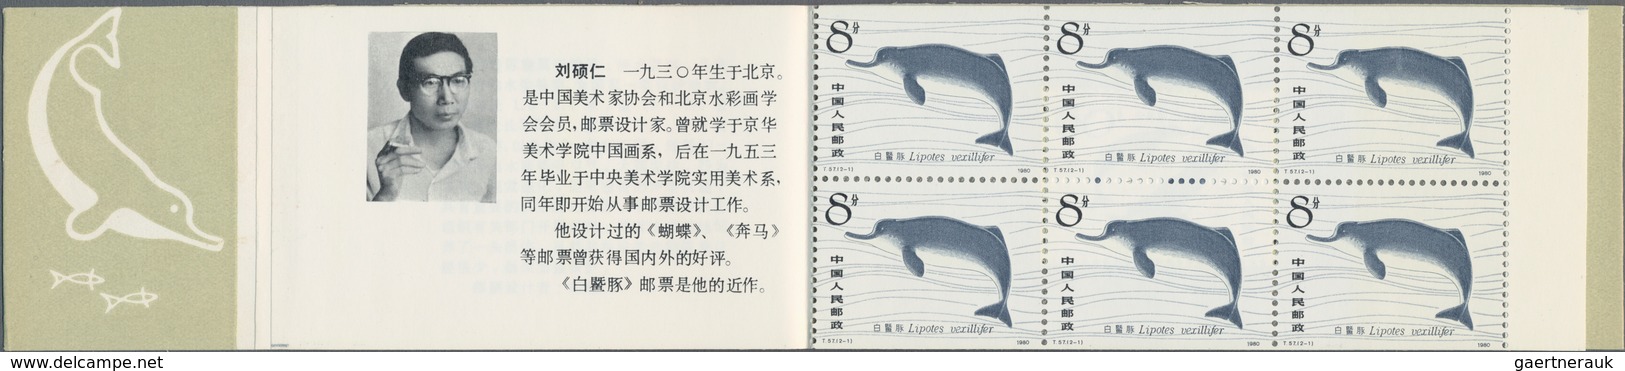 China - Volksrepublik: 1981, 4 SB2 Chinese River Dolphins Booklet Panes (Michel €440). - Briefe U. Dokumente